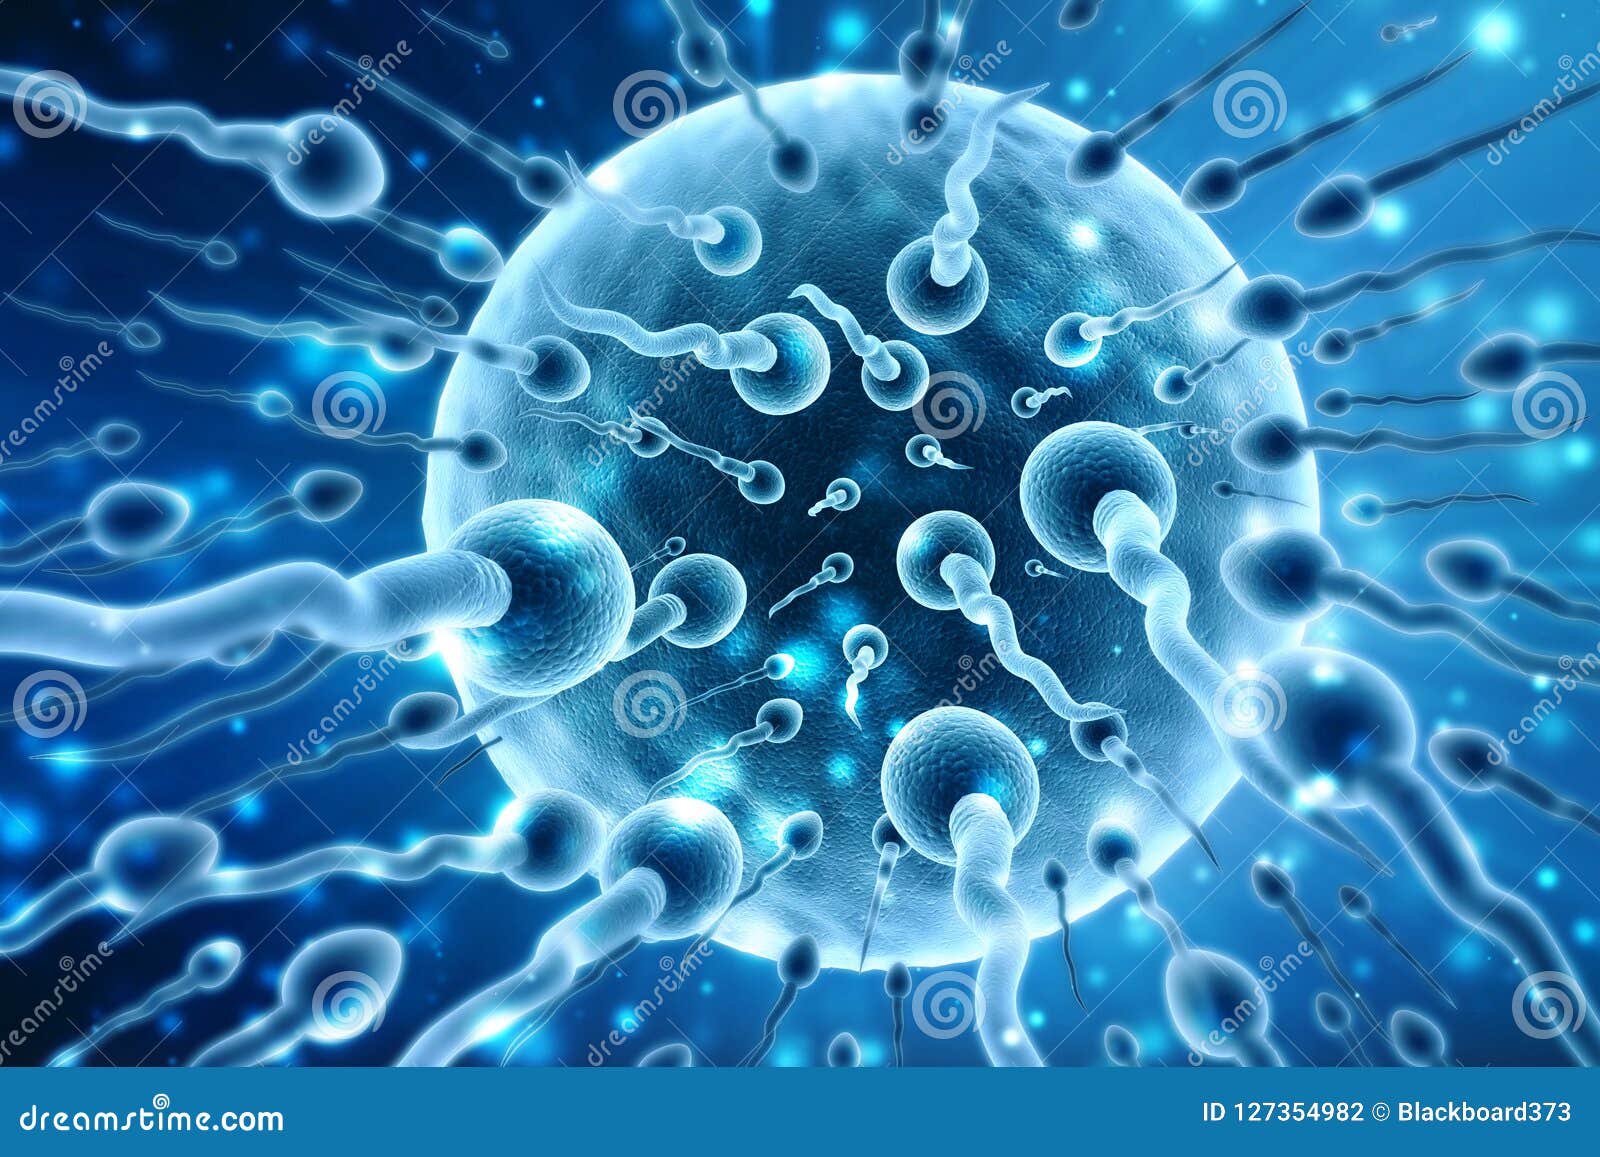 d-human-sperm-egg-cell-medical-background-human-sperm-cell-medical-abstract-background-sperm-egg-medical-127354982.jpg